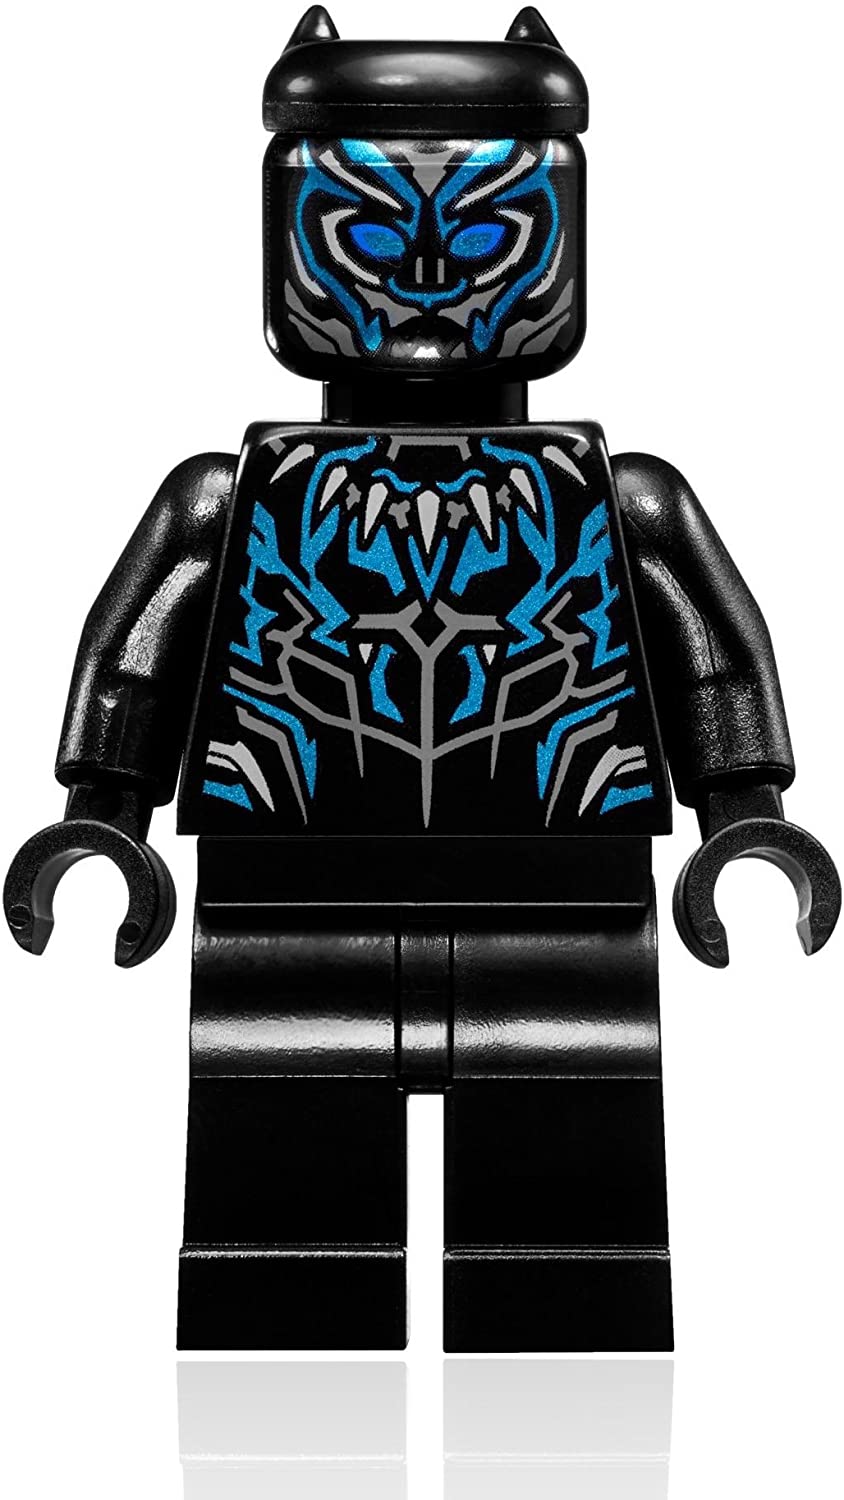 NEW LEGO Marvel Super Heroes Minifig Black Panther 76099 